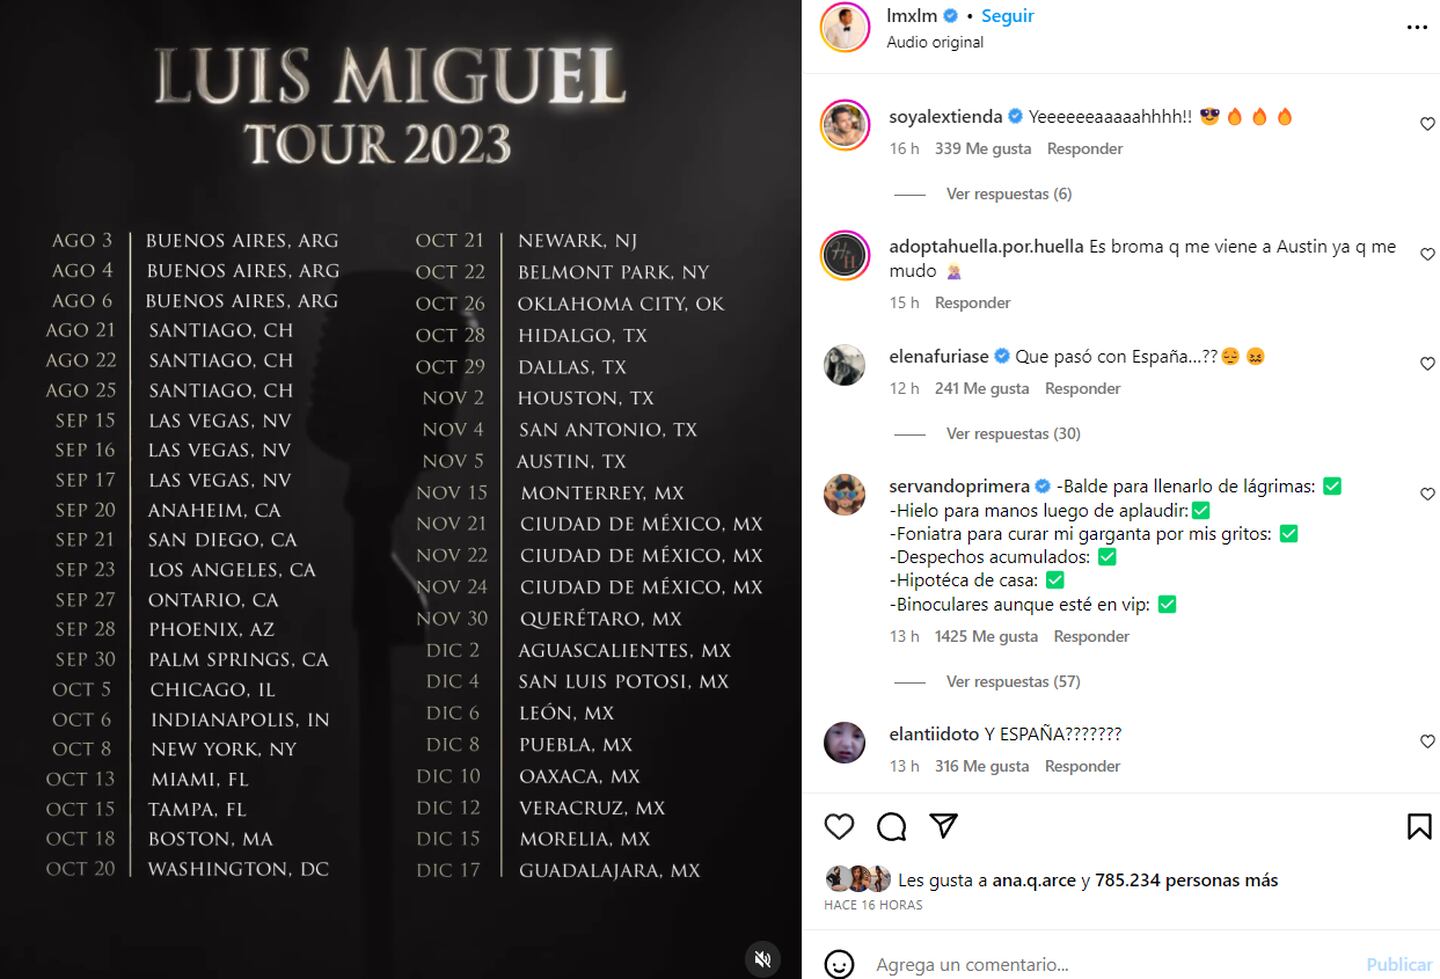 miguel tour schedule